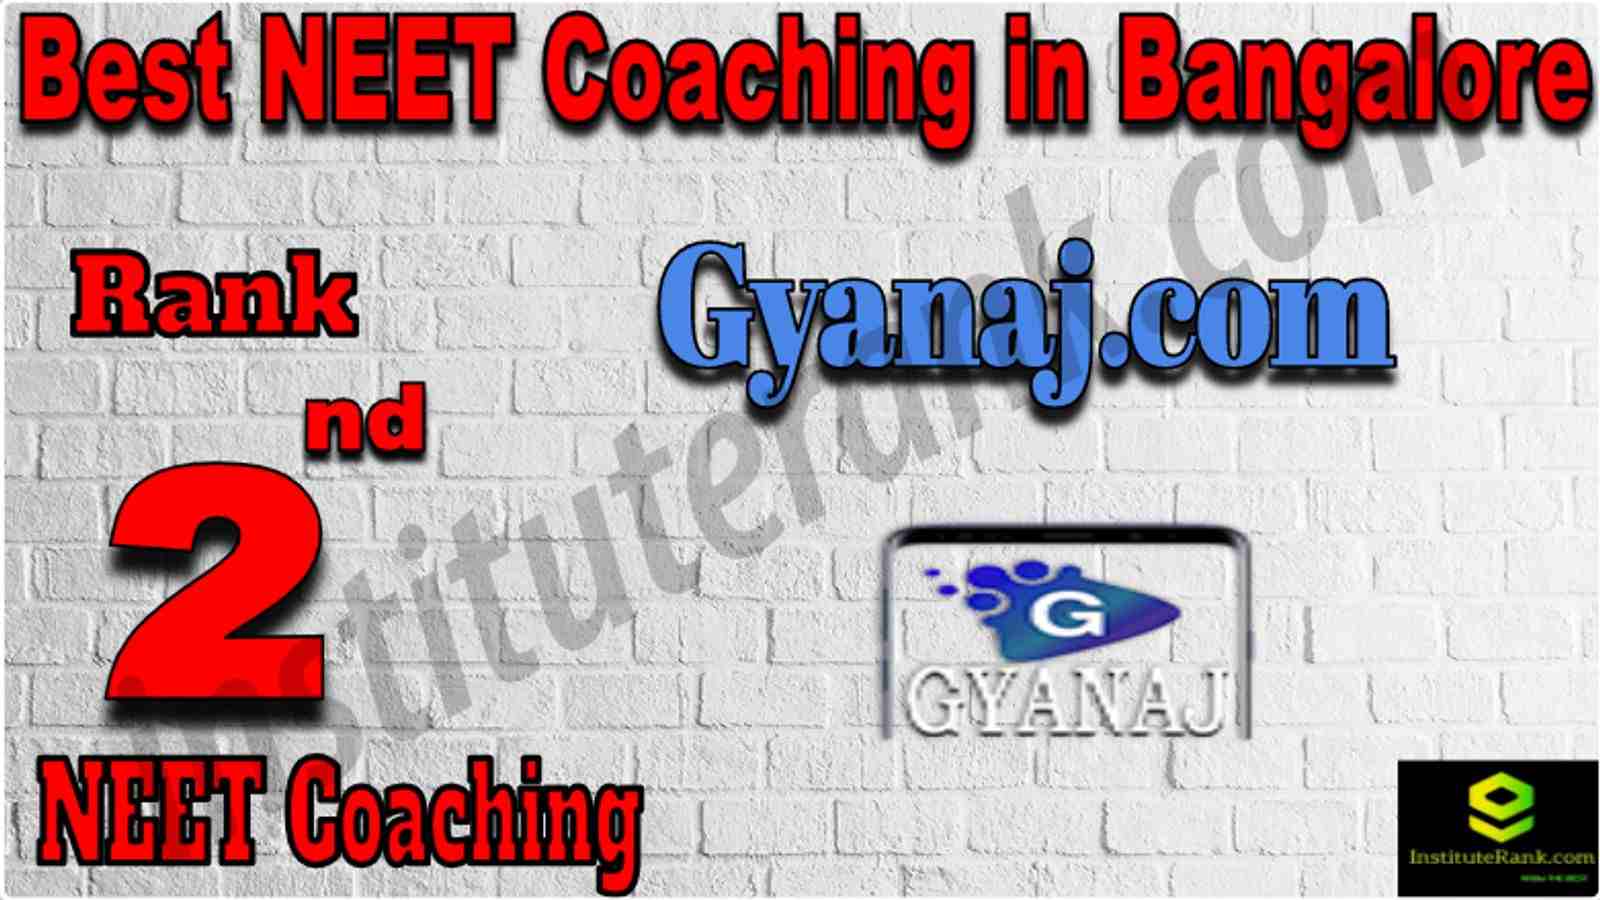 Rank 2 Best NEET Coaching in Bangalore